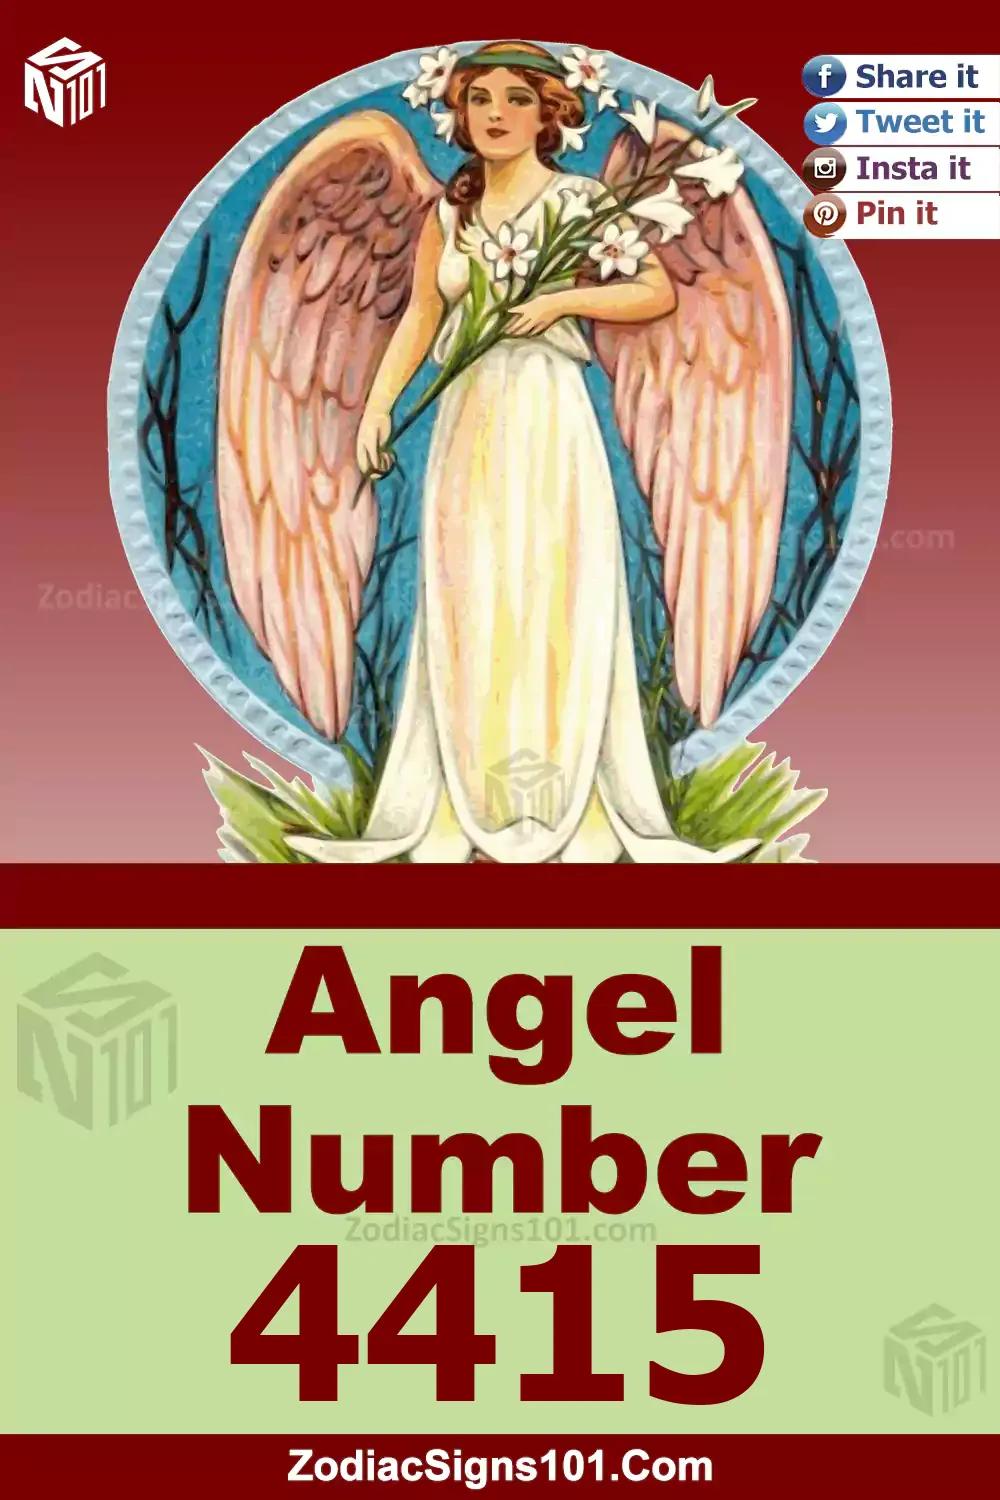 4415-Angel-Number-Meaning.jpg